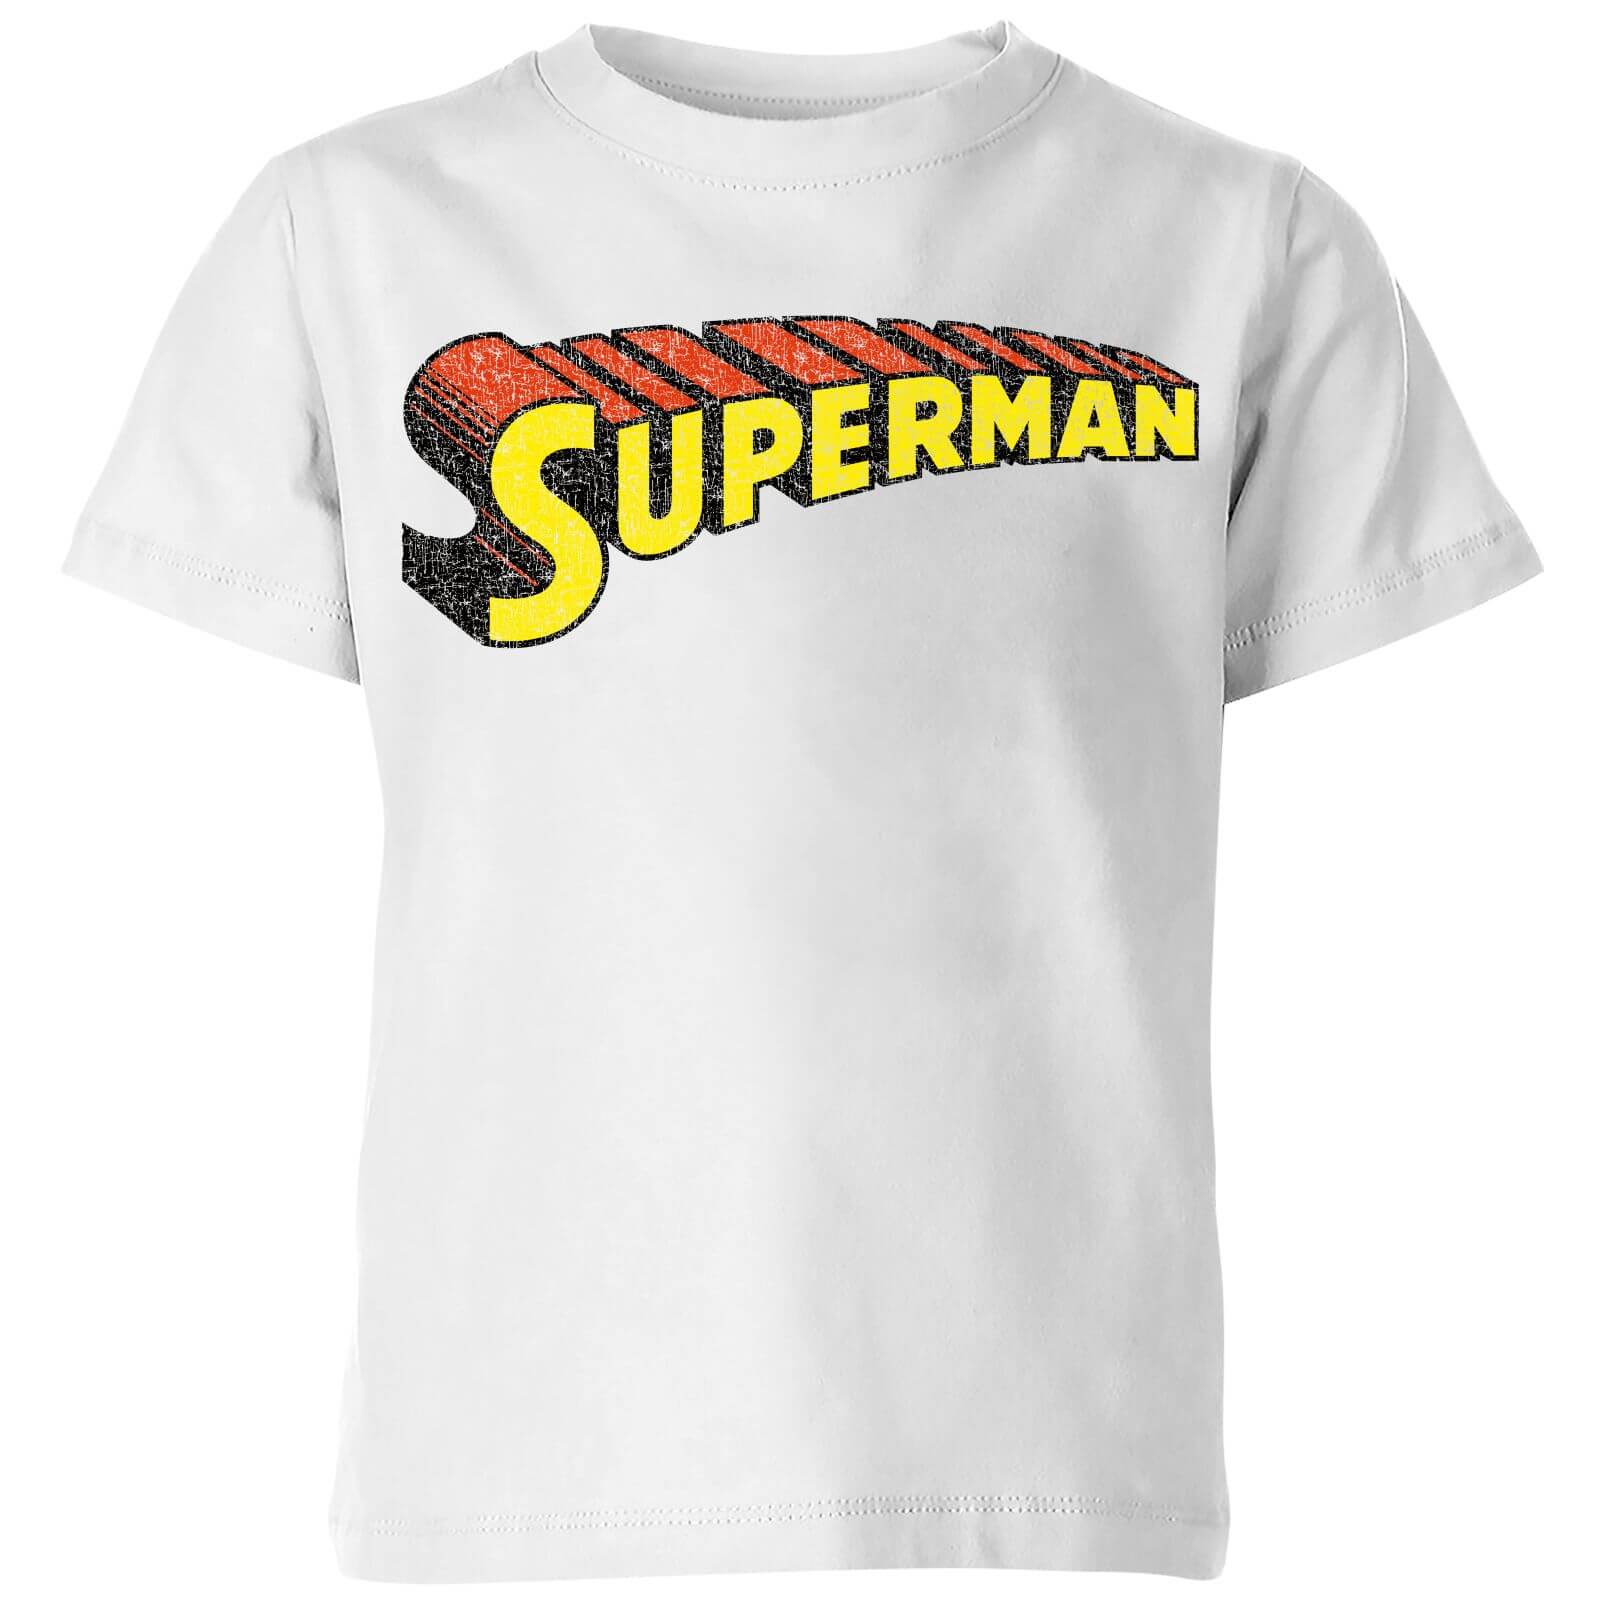 Dc Comics Dc superman telescopic crackle logo kids' t-shirt - white - 9-10 years - white